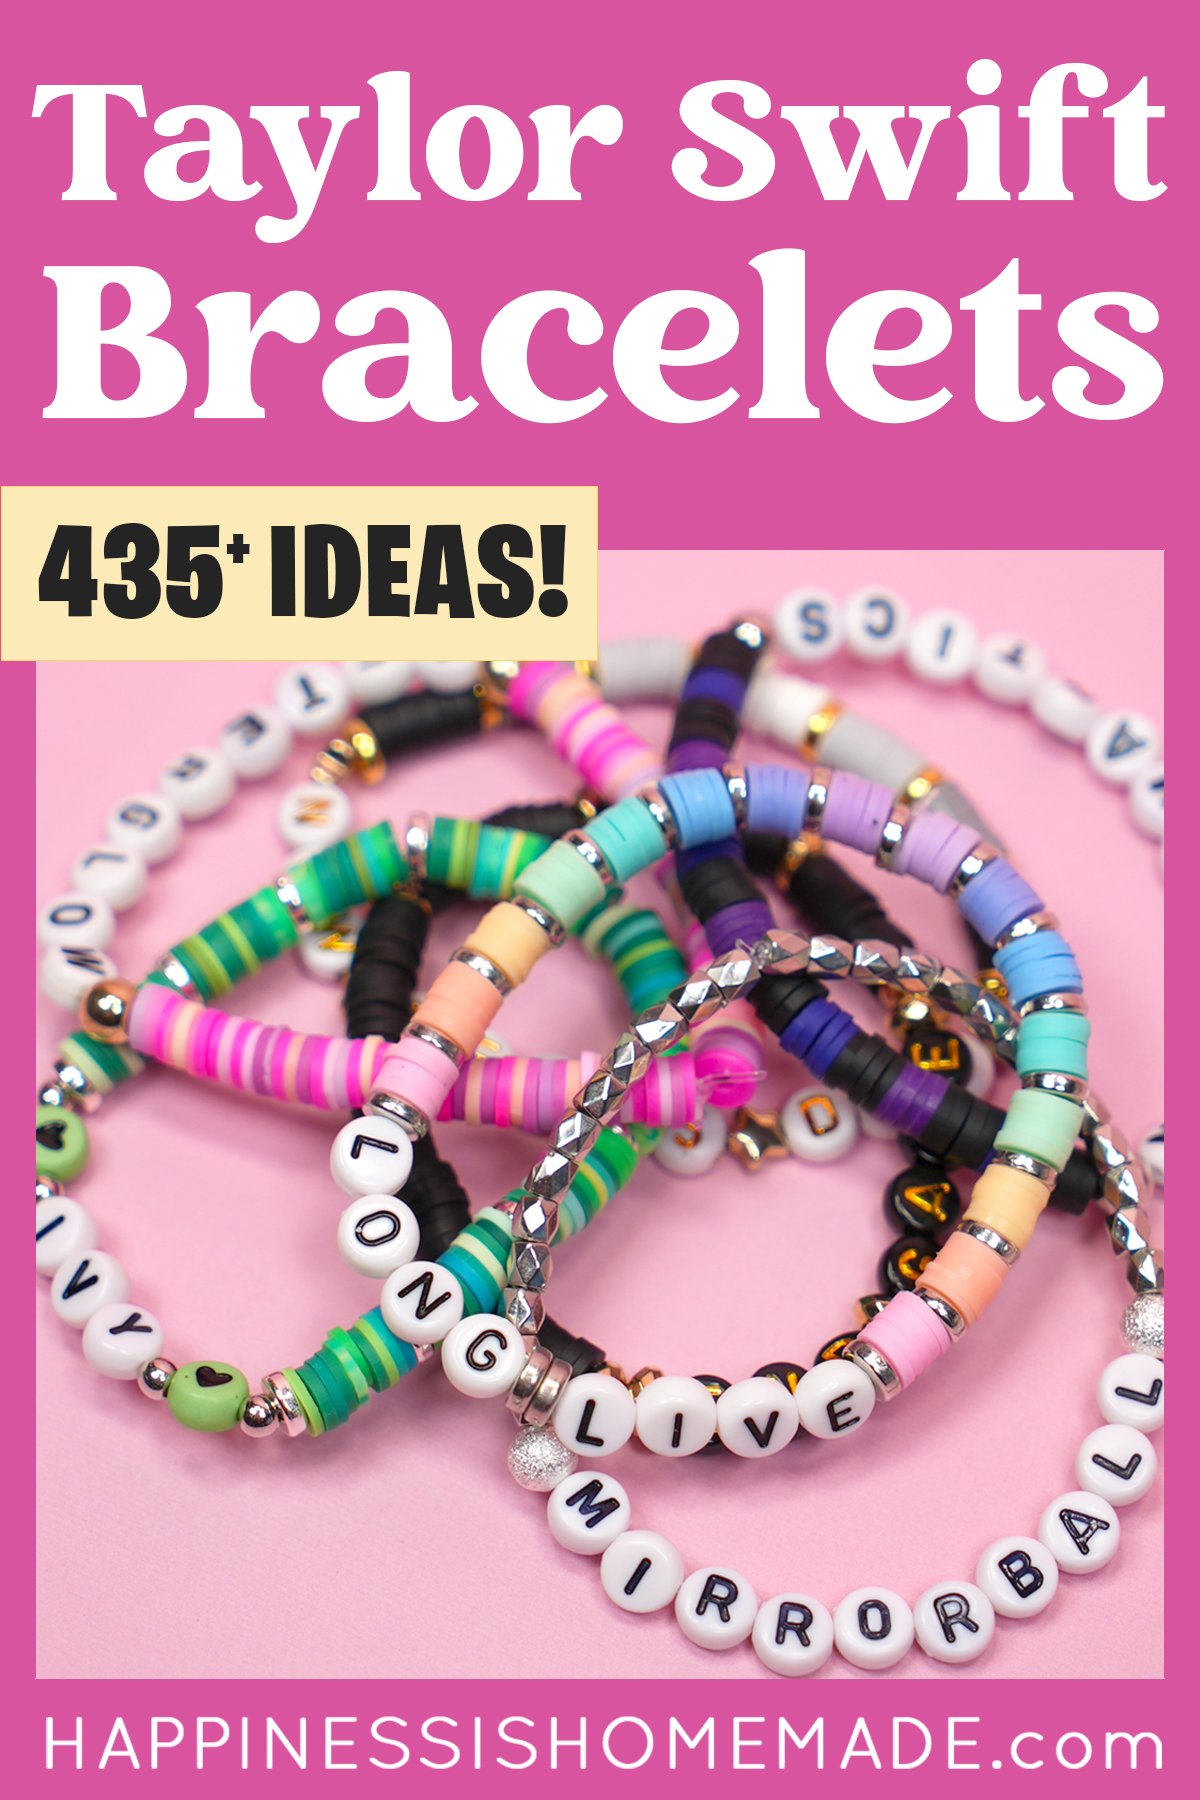 Pinterest graphic: "Taylor Swift Bracelets: 435+ Ideas" with bracelet examples